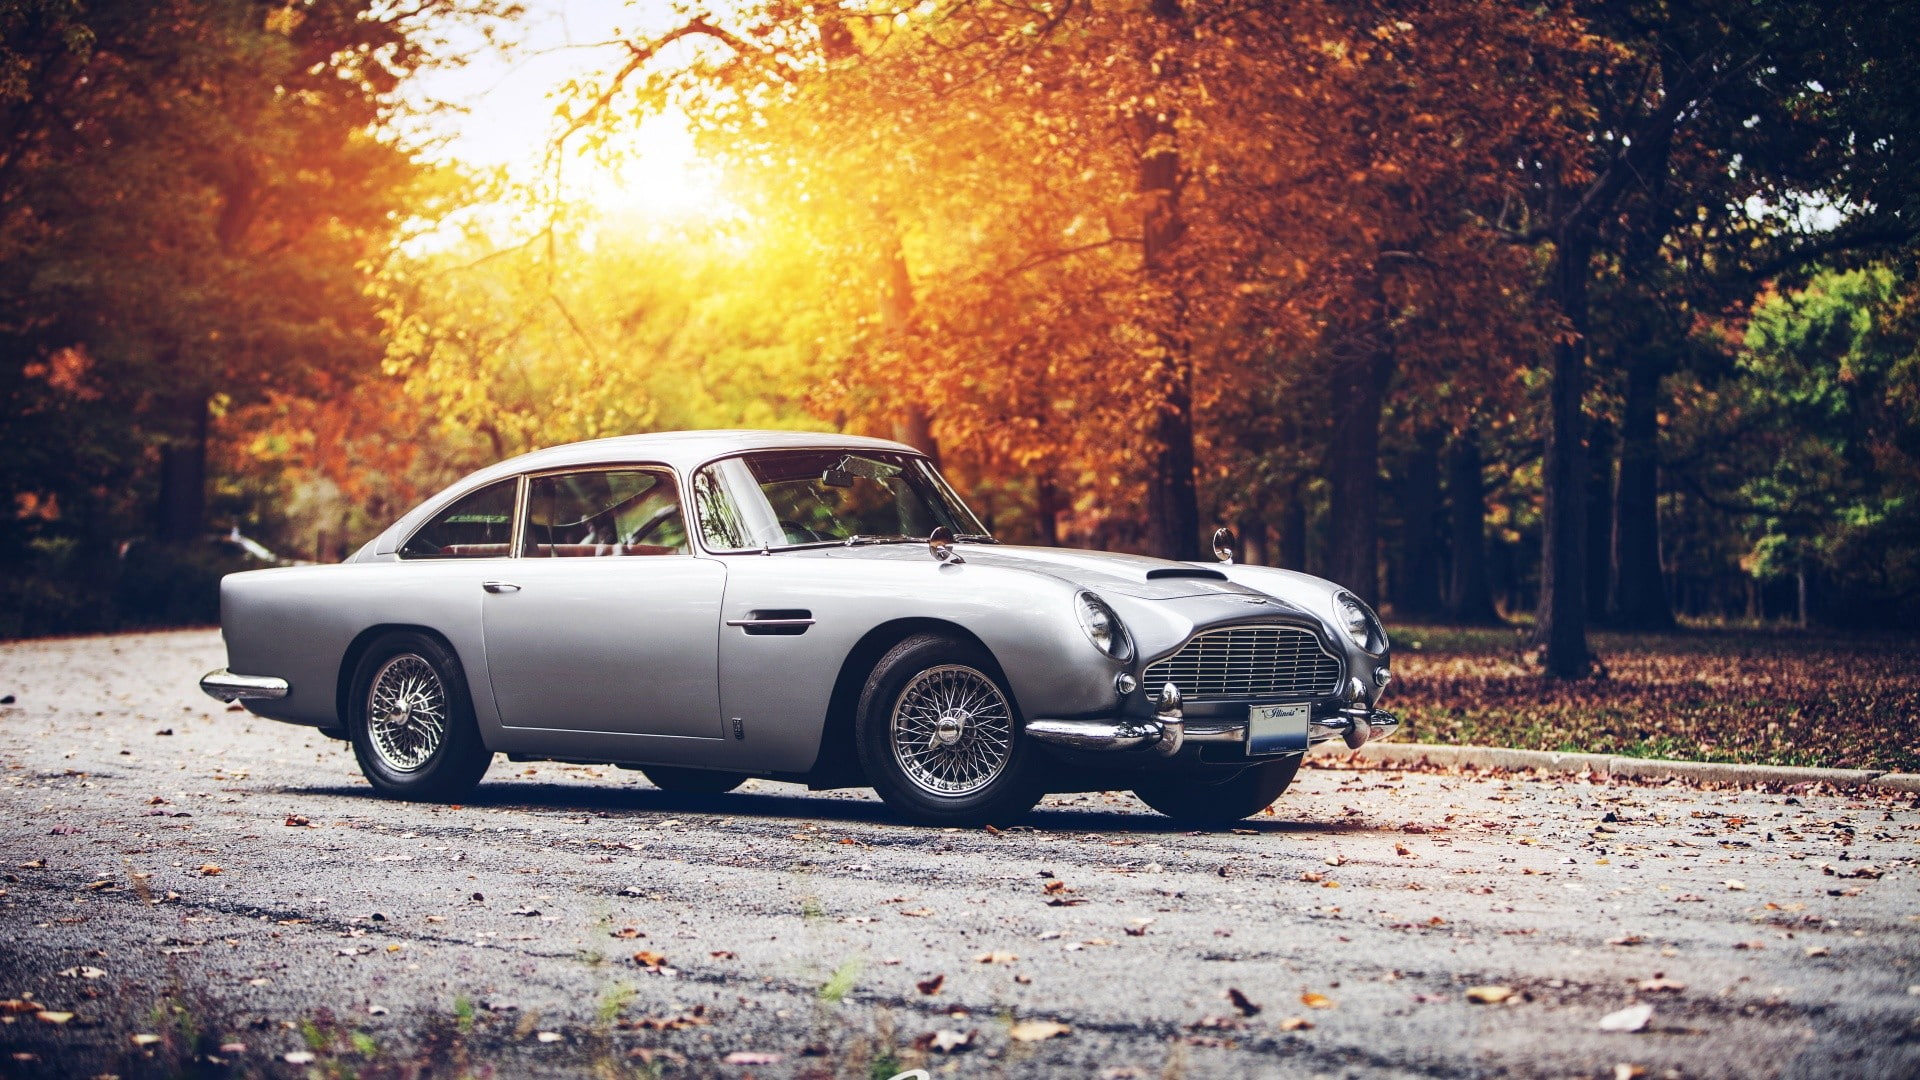 Aston Martin DB5, car, James Bond, Bond Cars